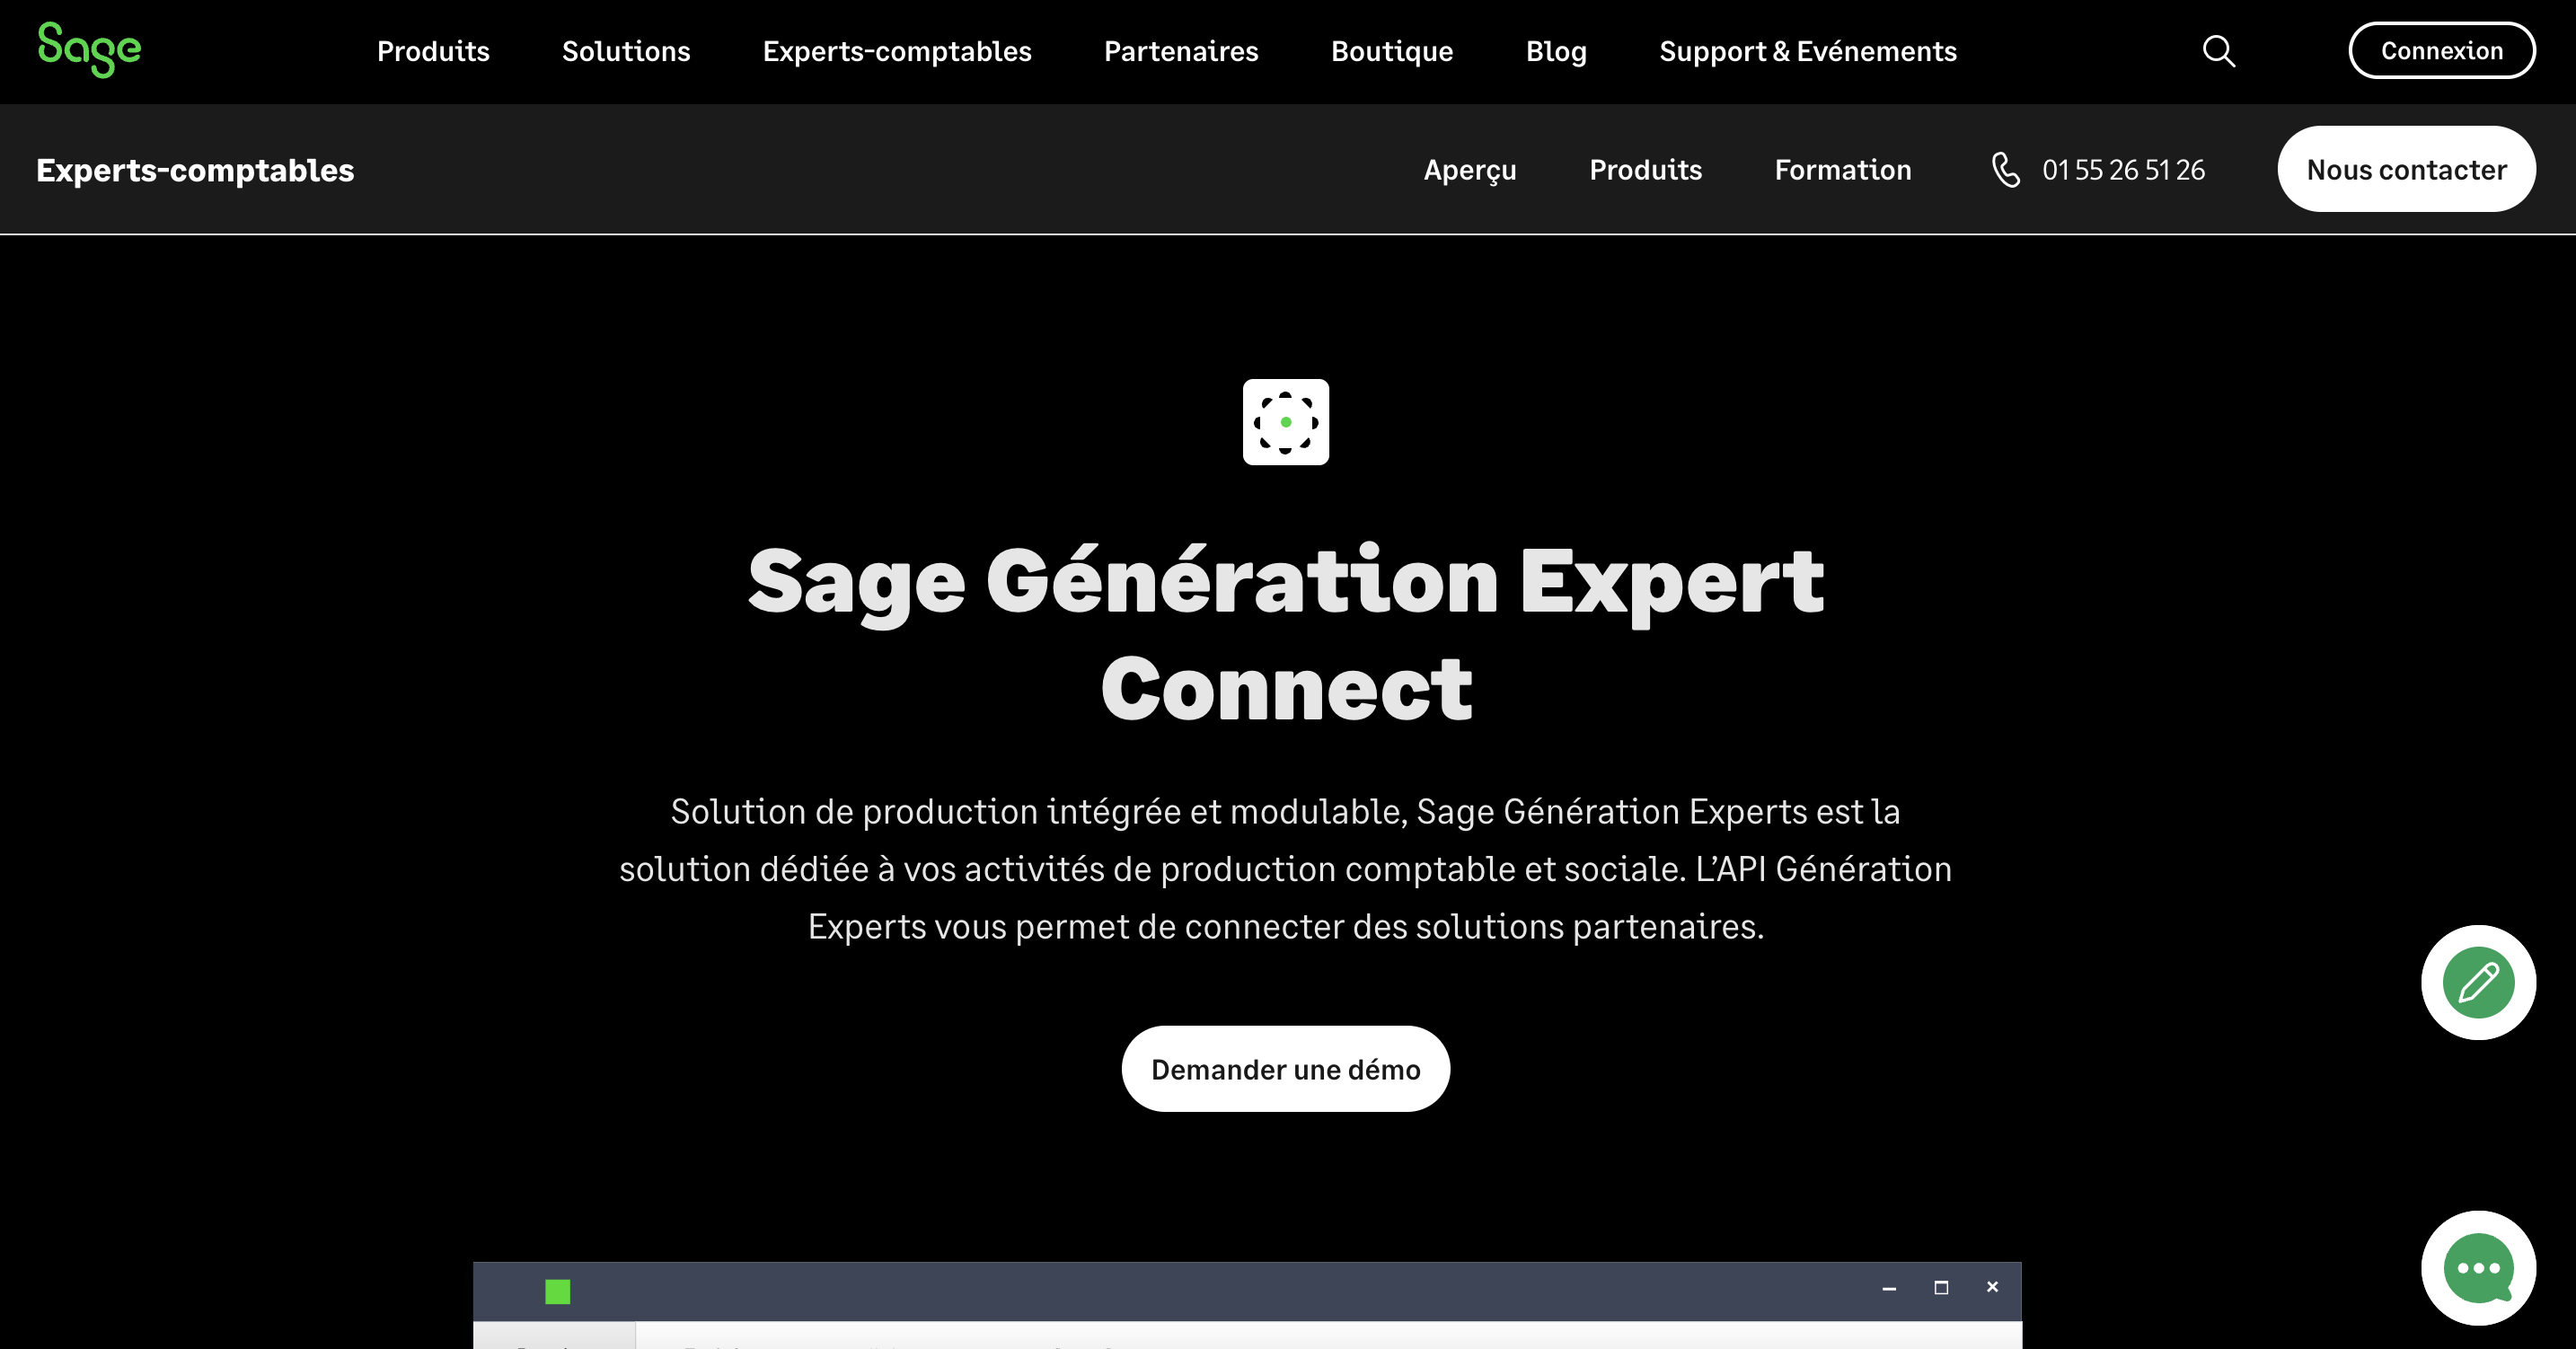 Sage Génération Expert Connect